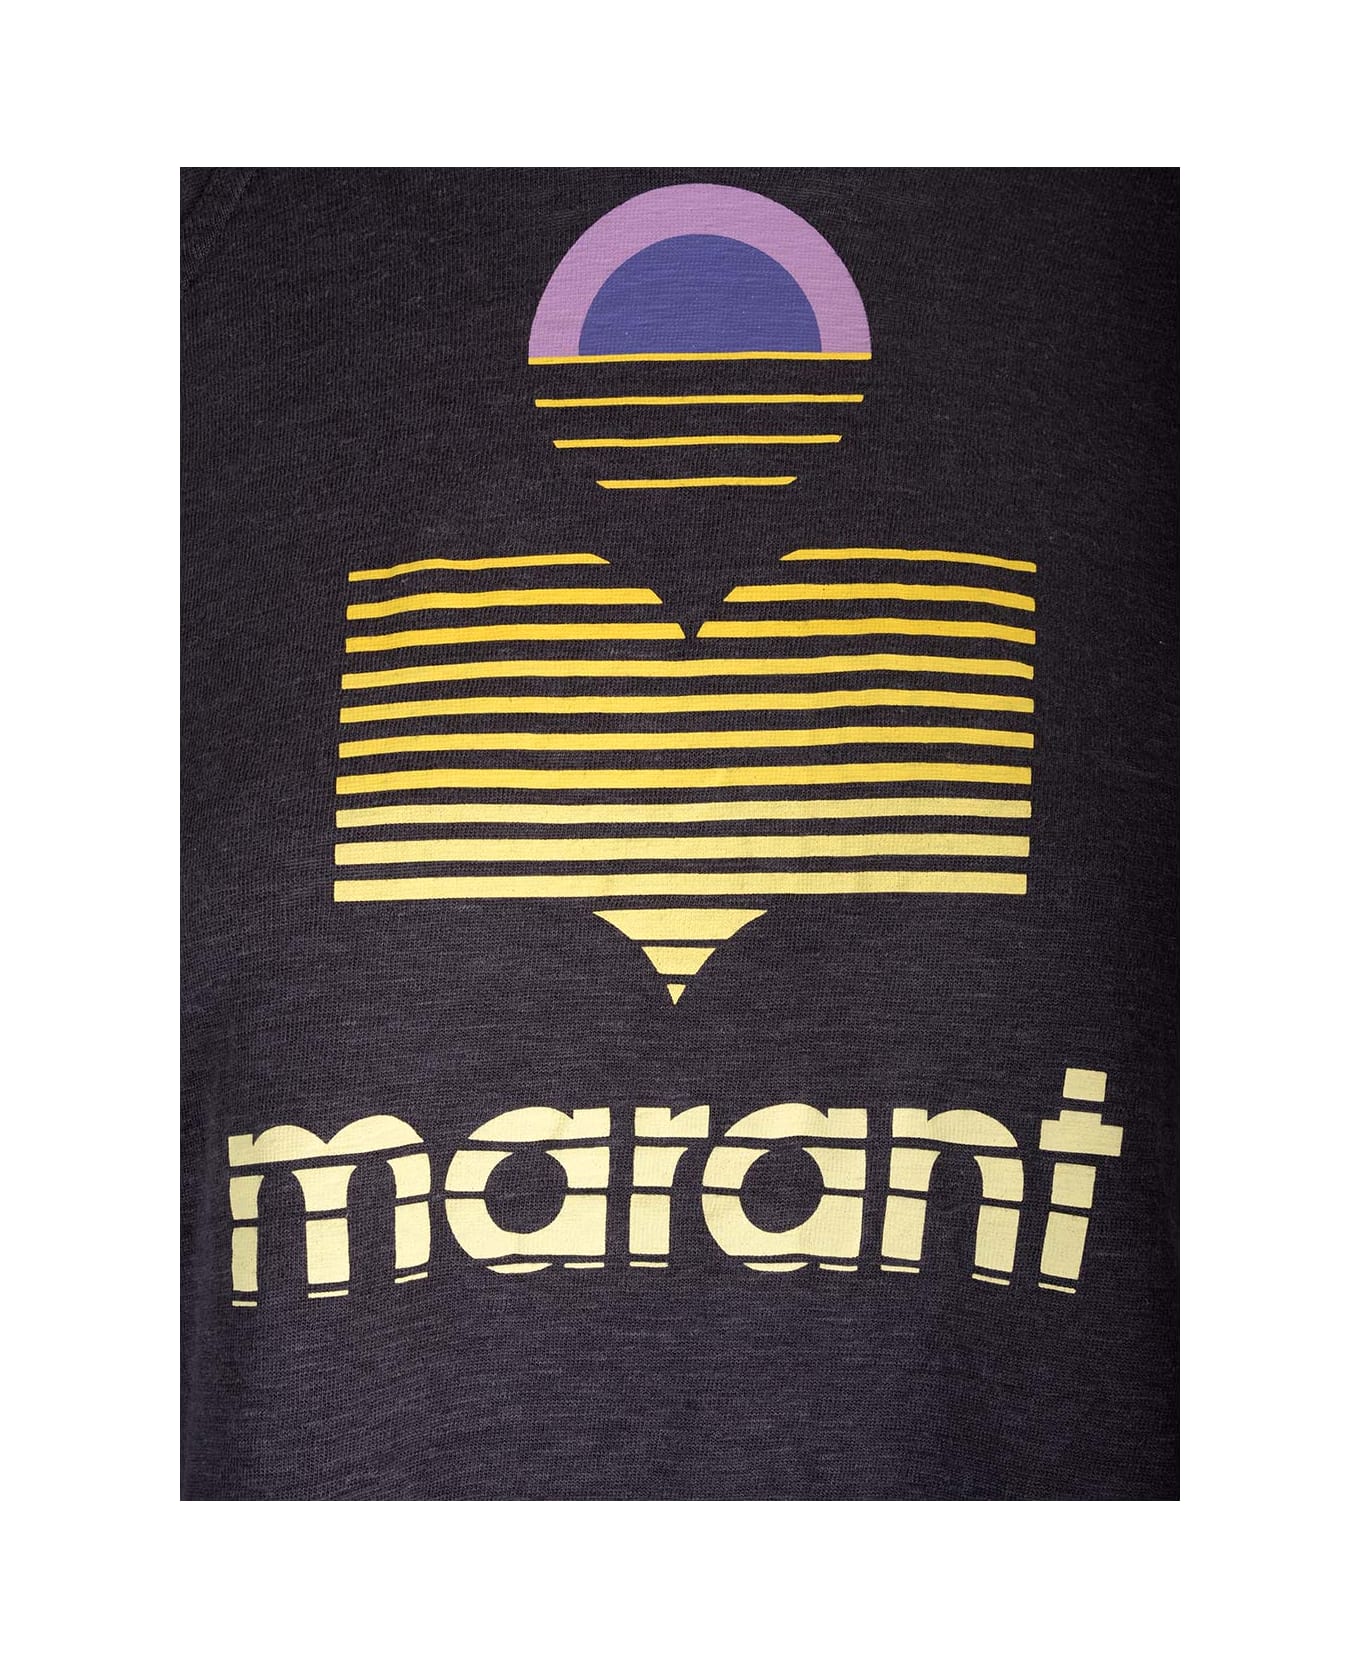 Marant Étoile Kiefferf T-shirt With Print - Black